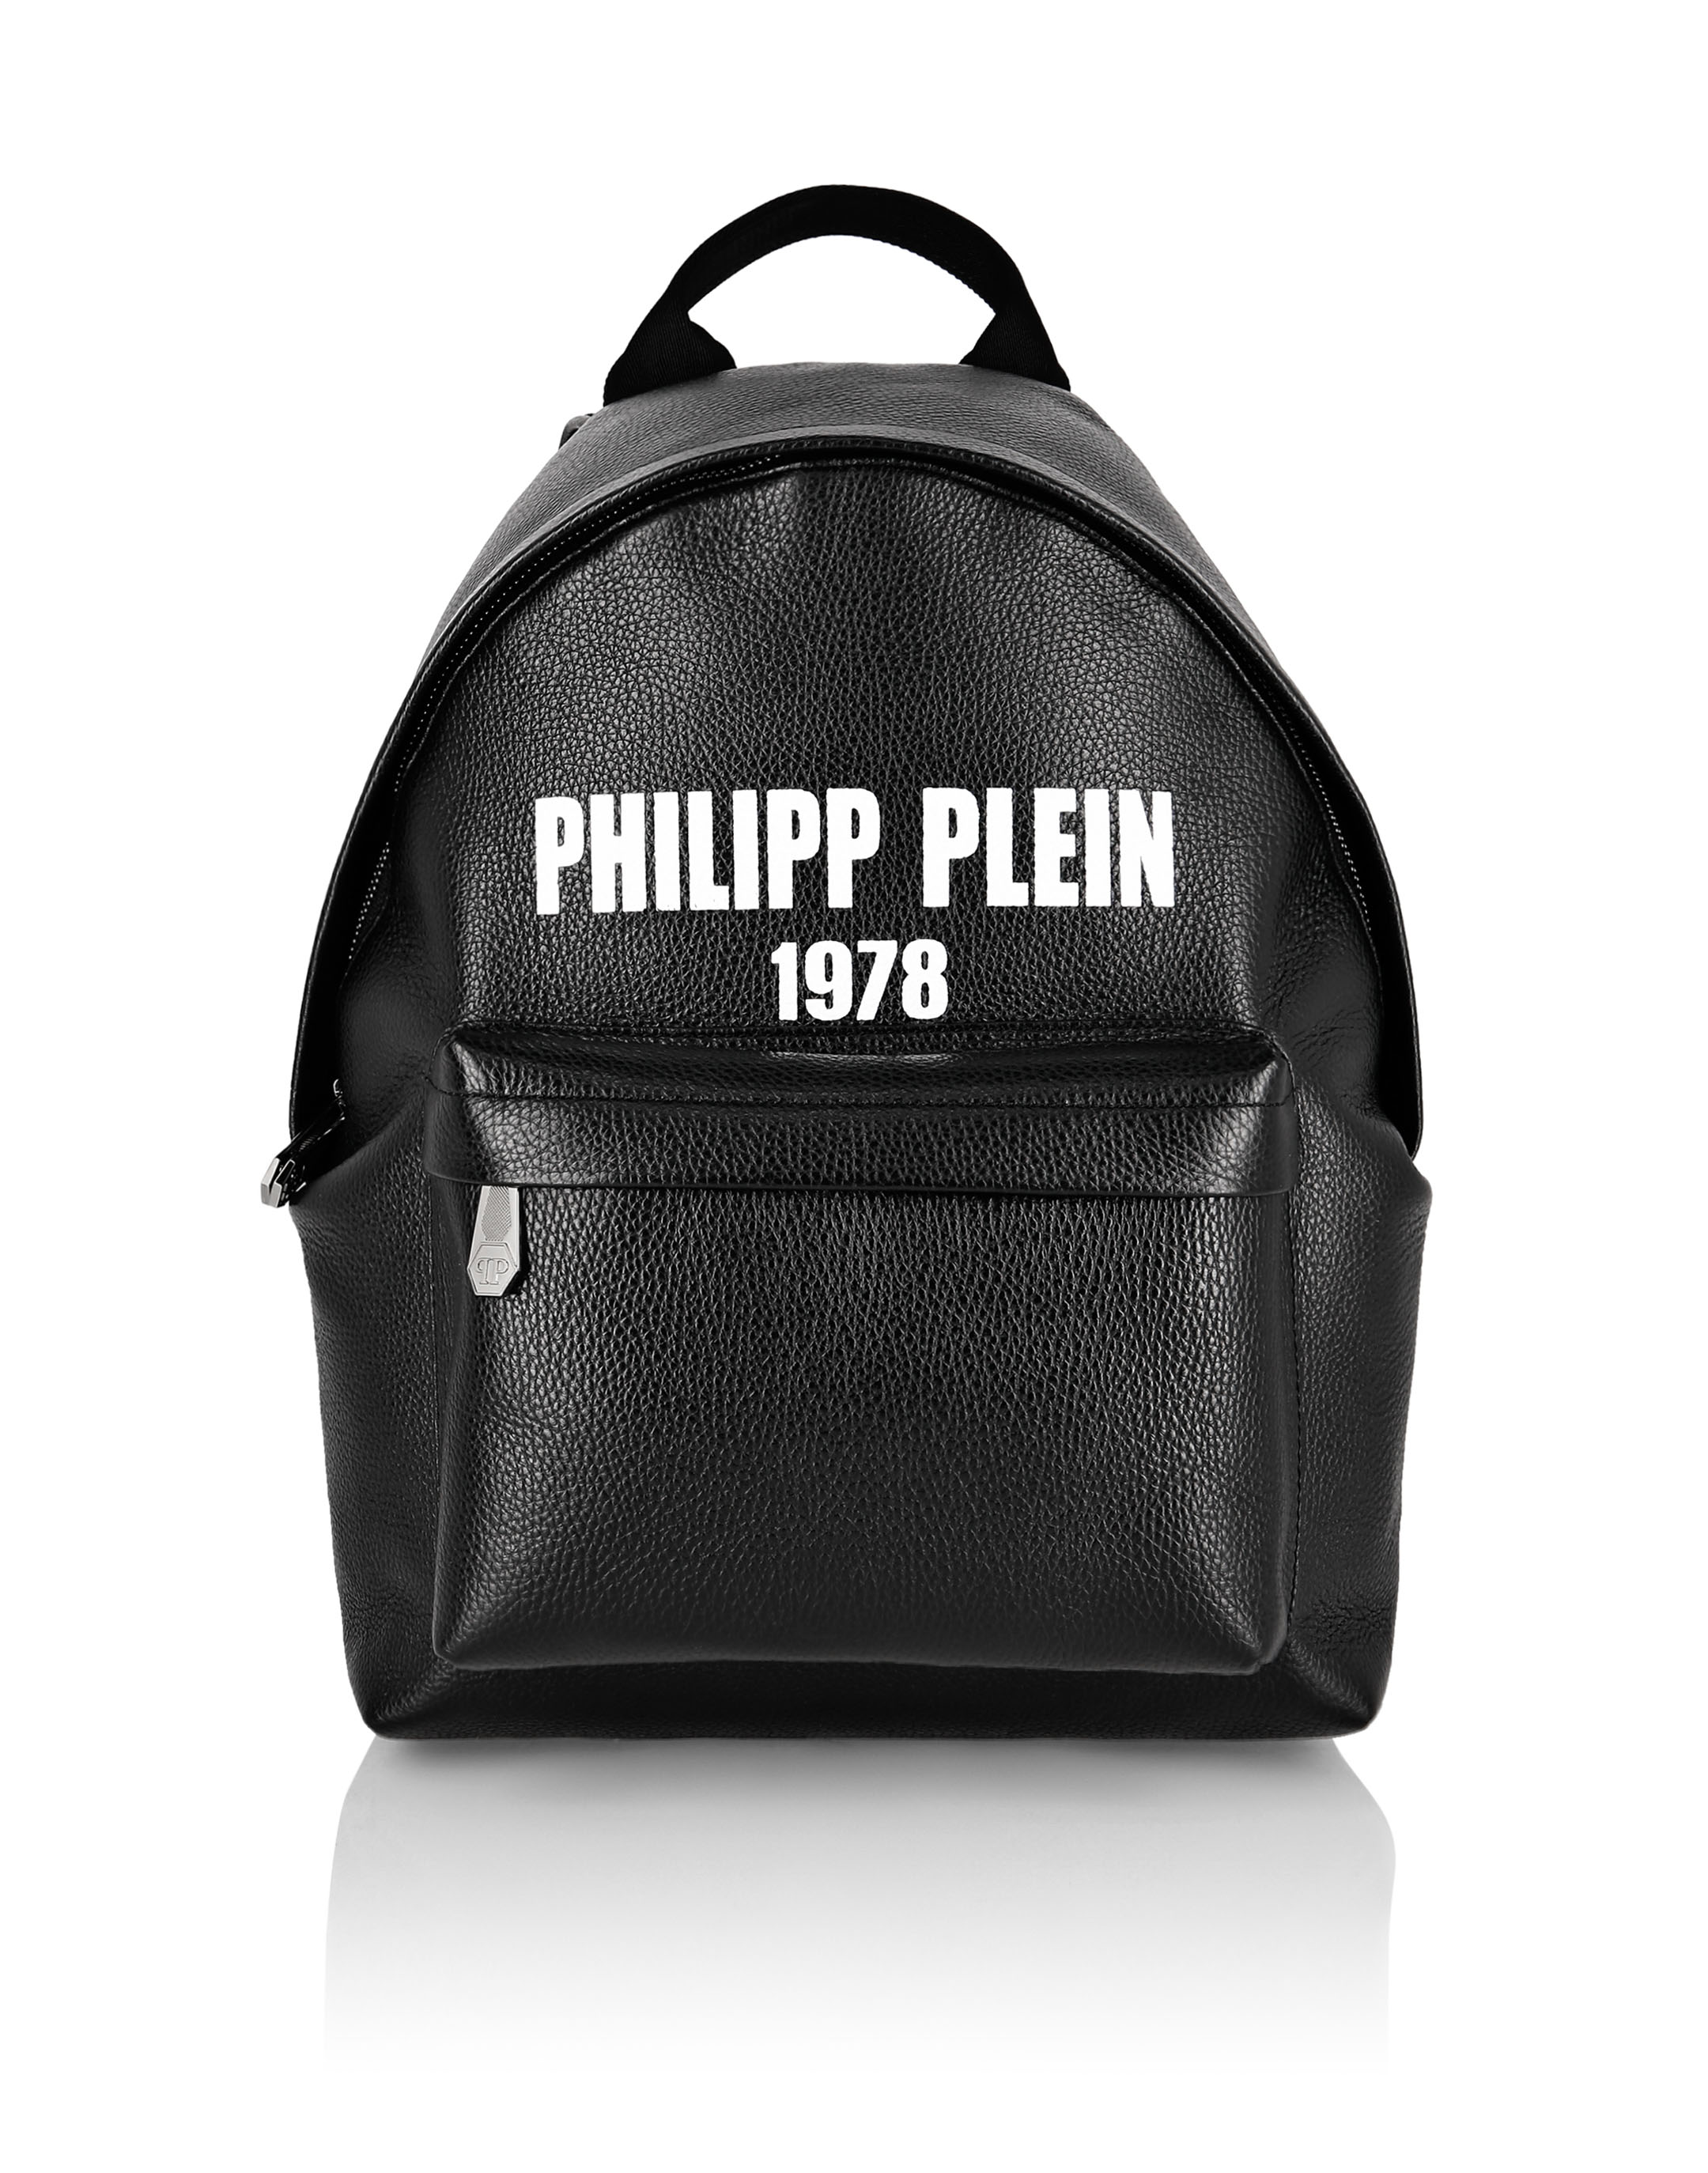 Backpack PP1978 | Philipp Plein